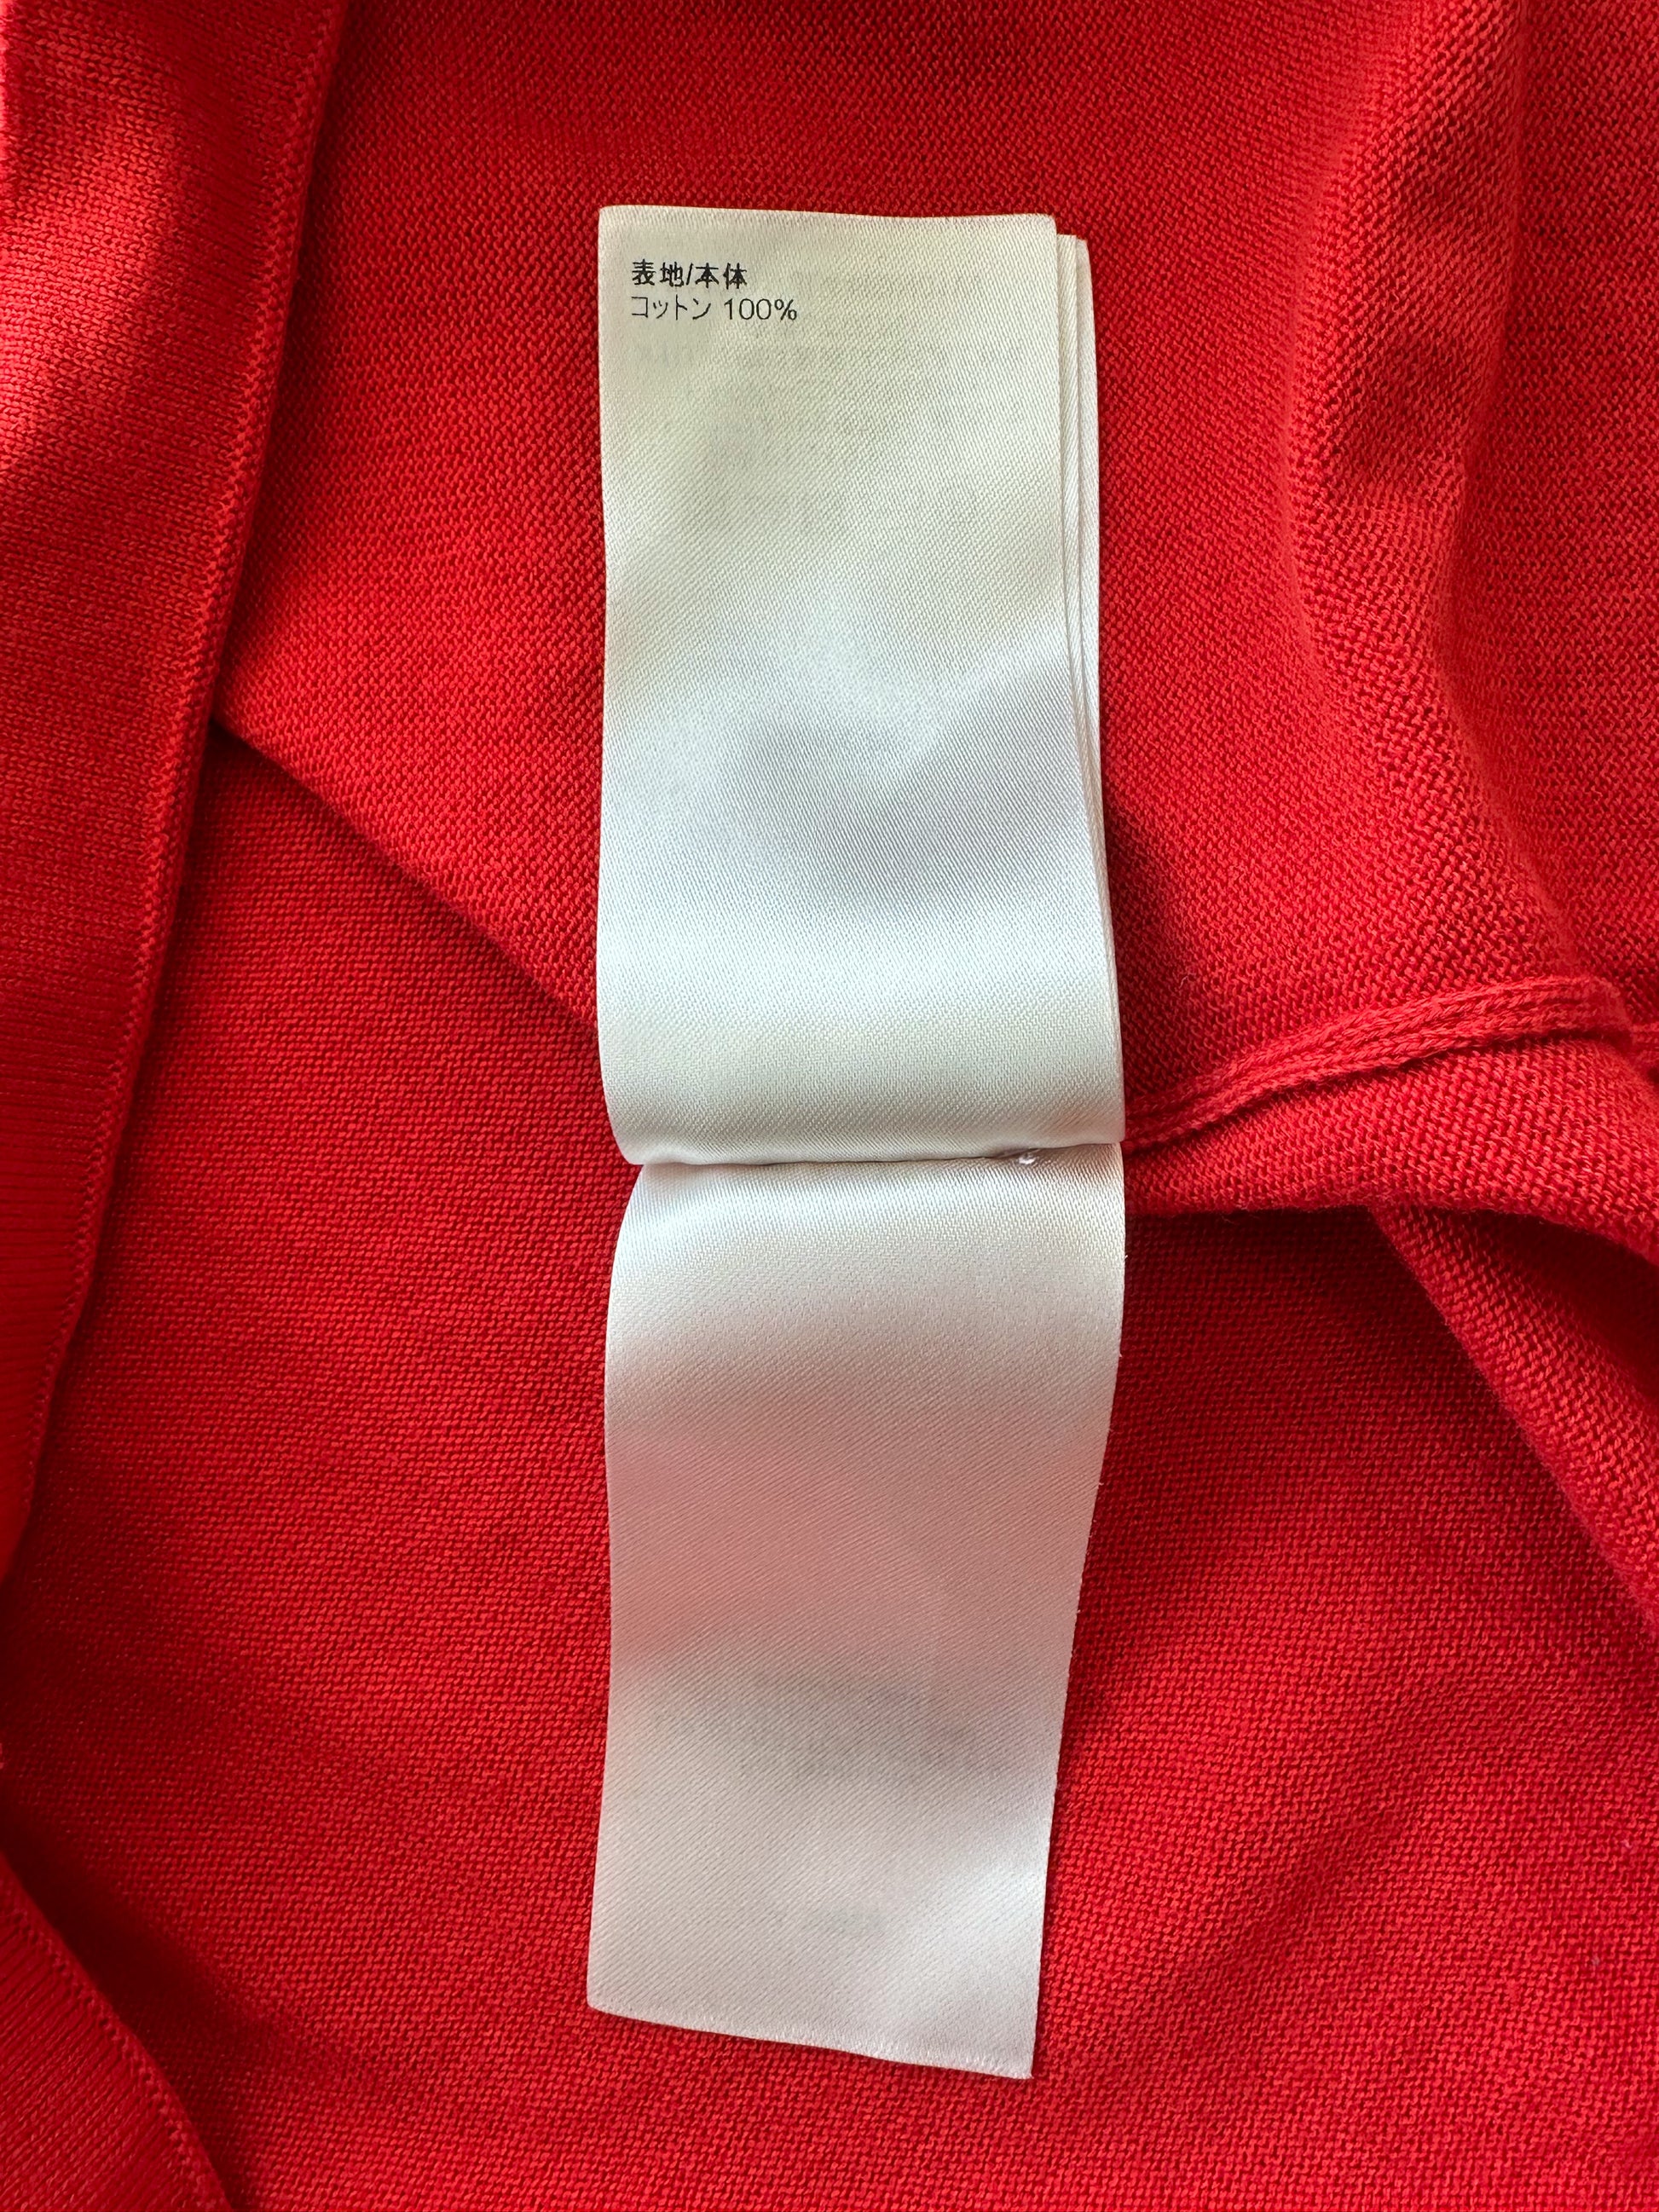 Louis Vuitton Red Graphic Logo T-Shirt